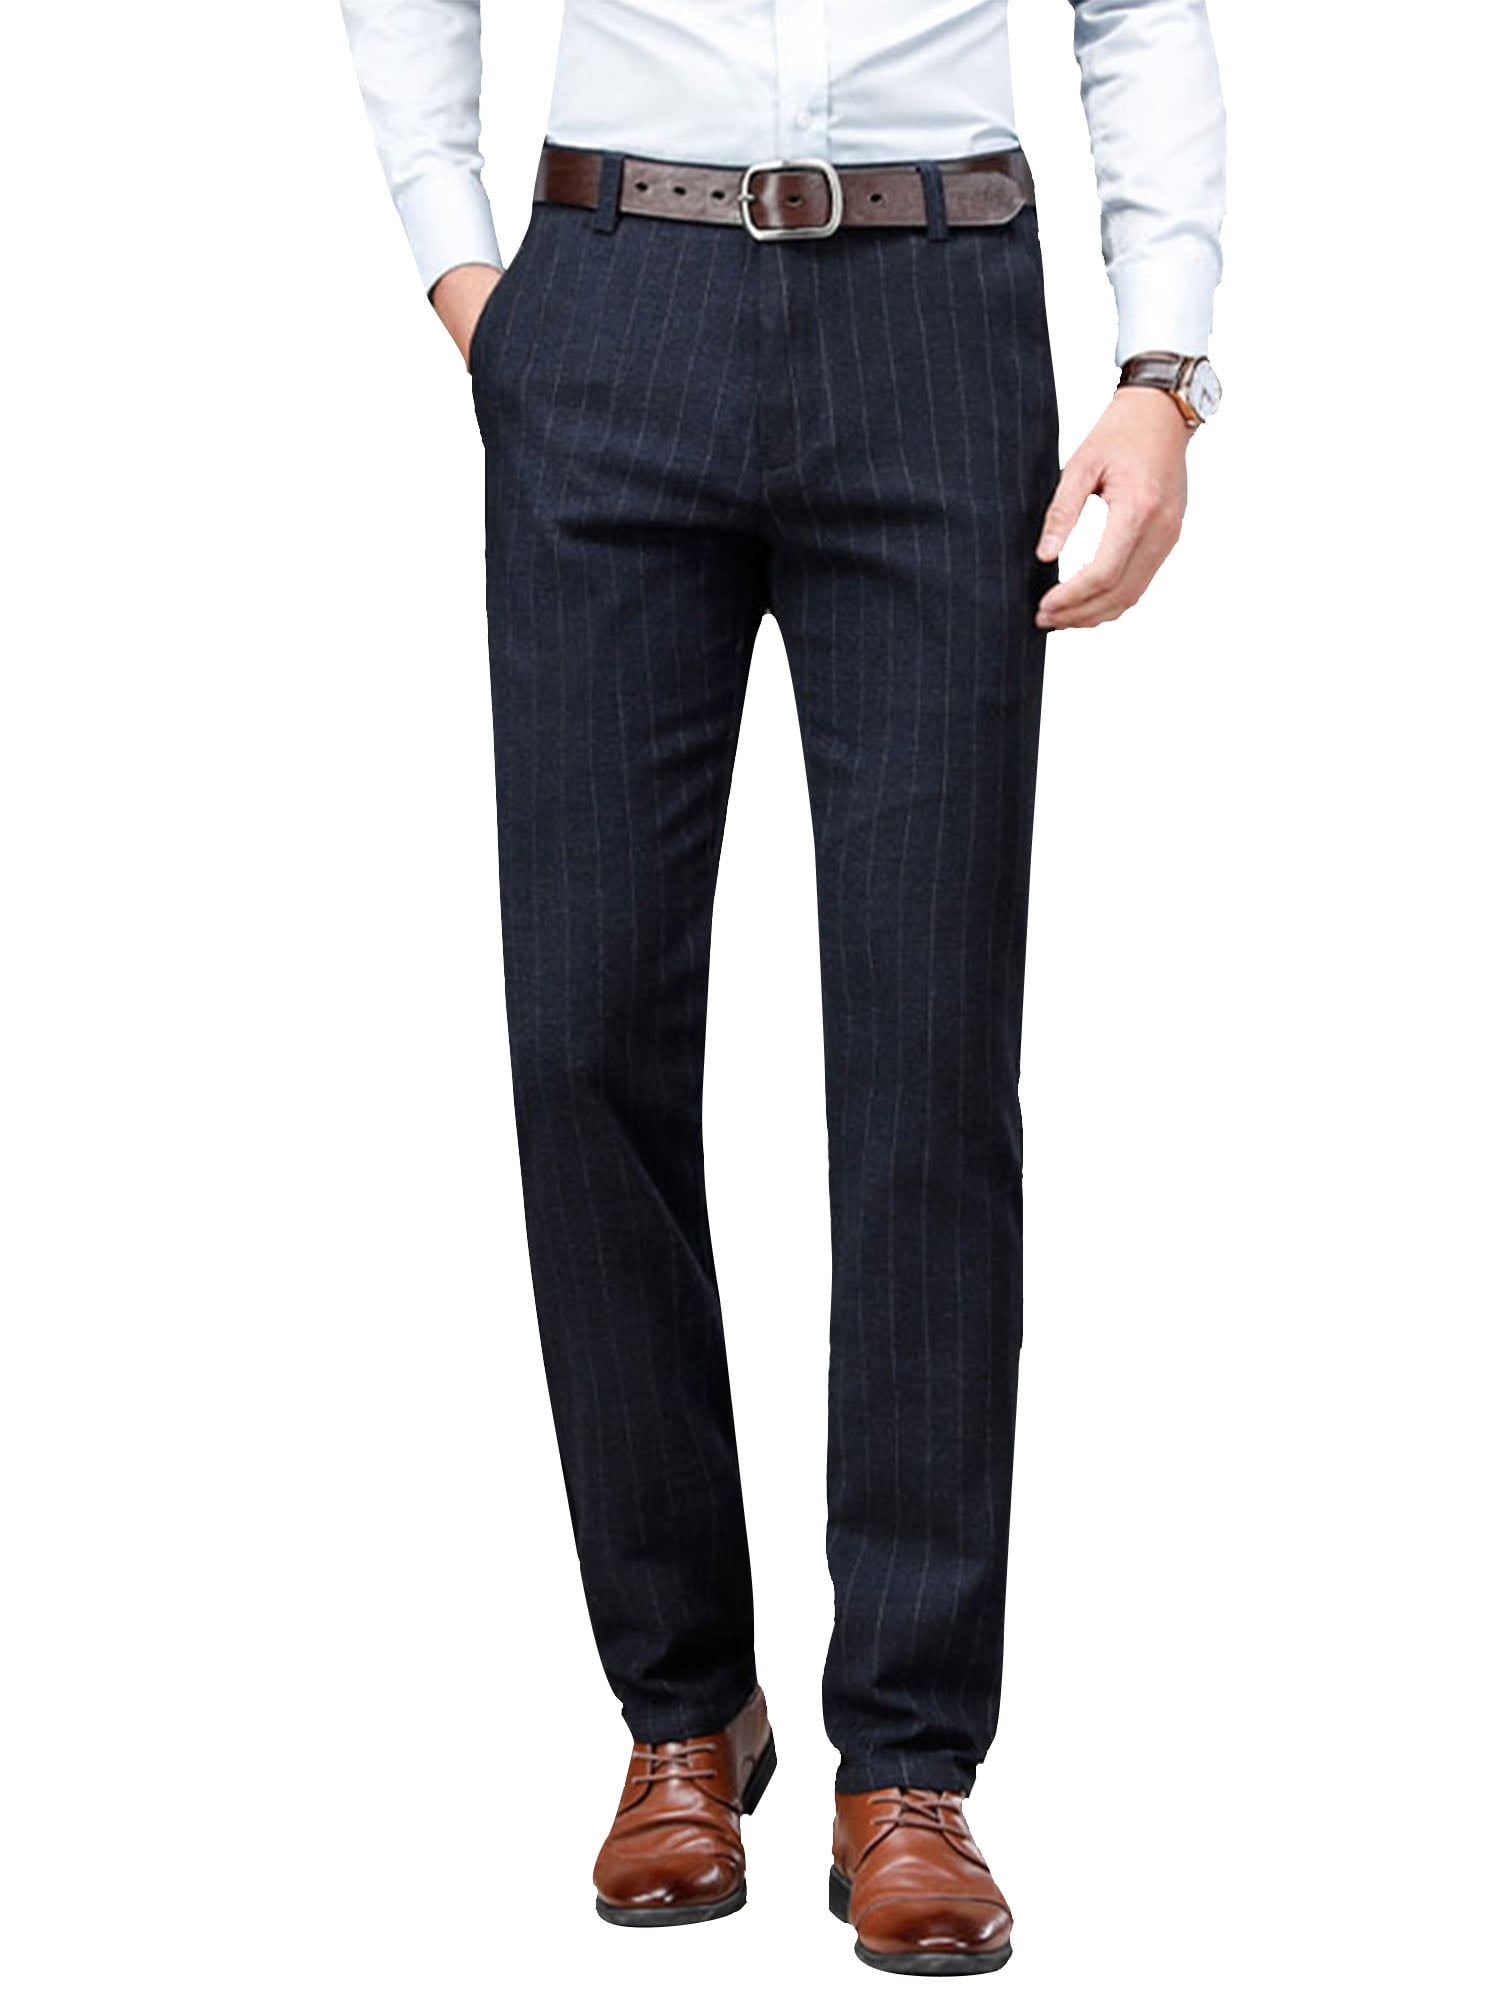 FONMA Mens Fashion Summer Trouser Casual Solid Pocket Drawstring Cotton Long Pants 